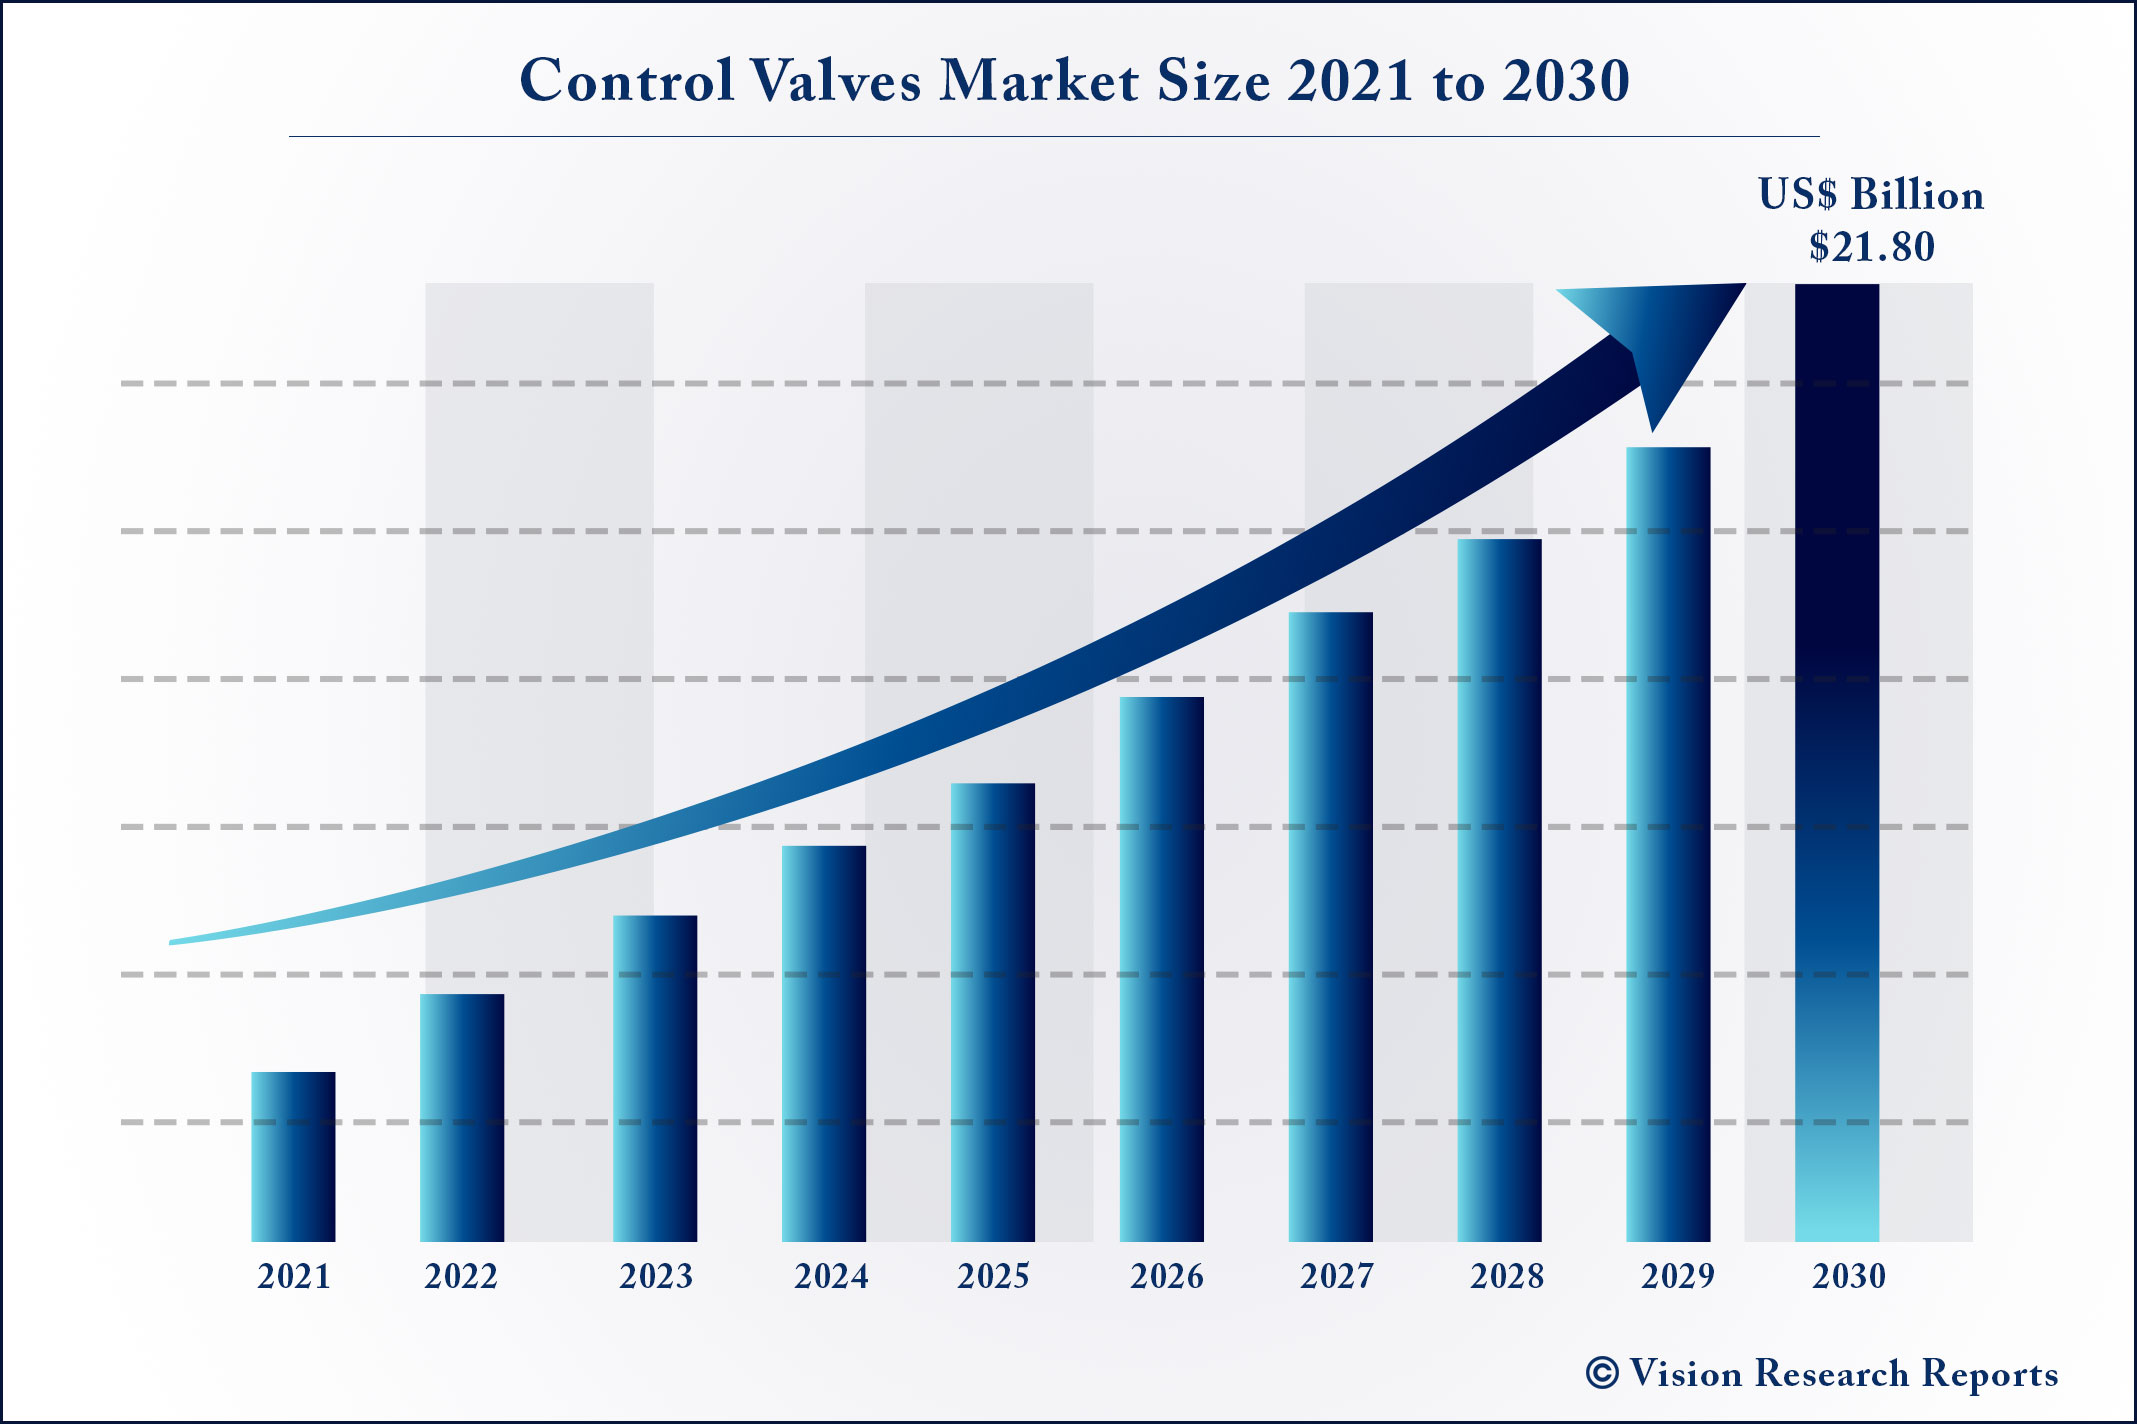 Control Valves Market Size 2021 to 2030